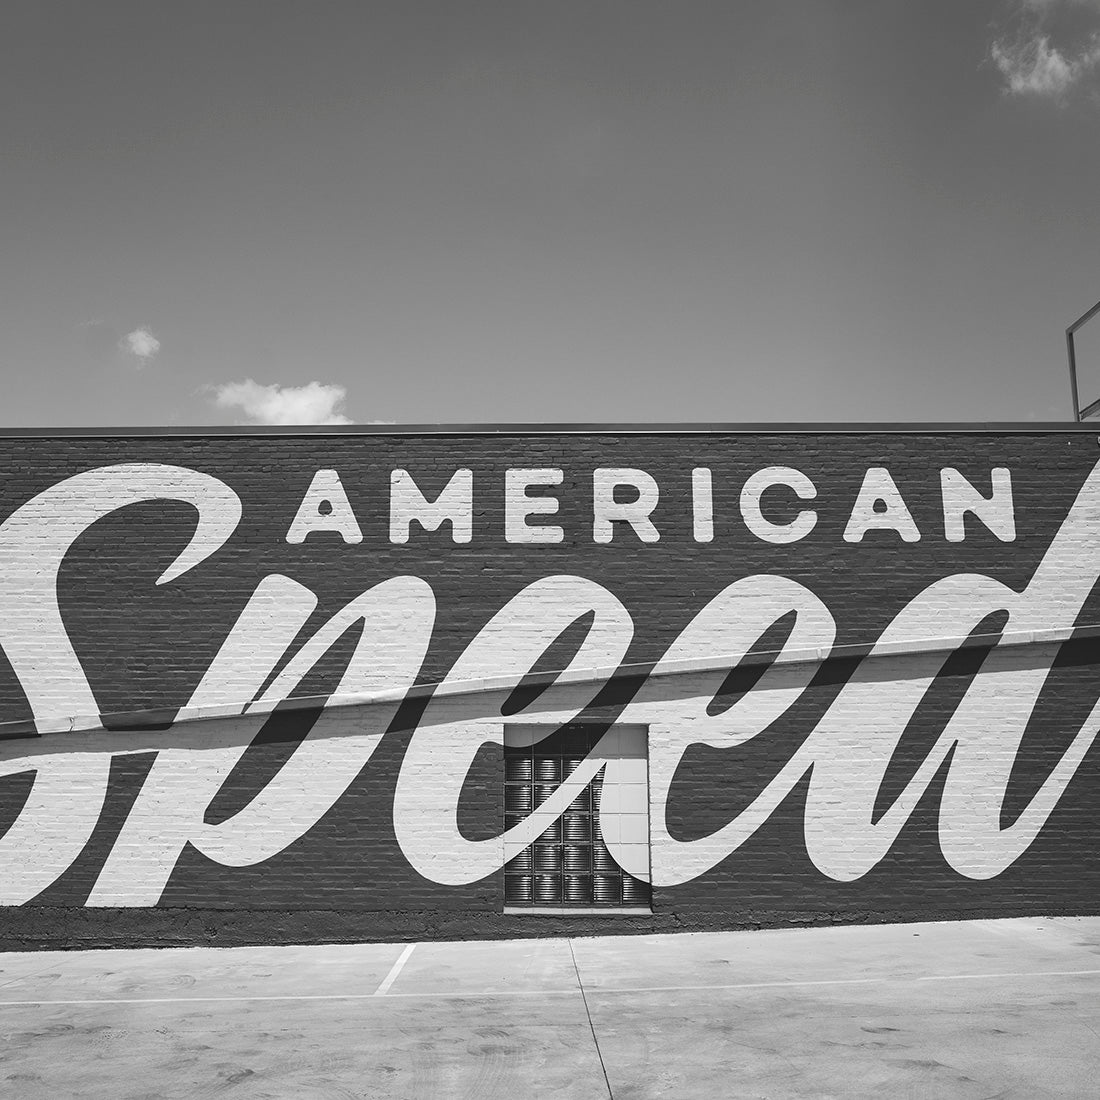 American Speed